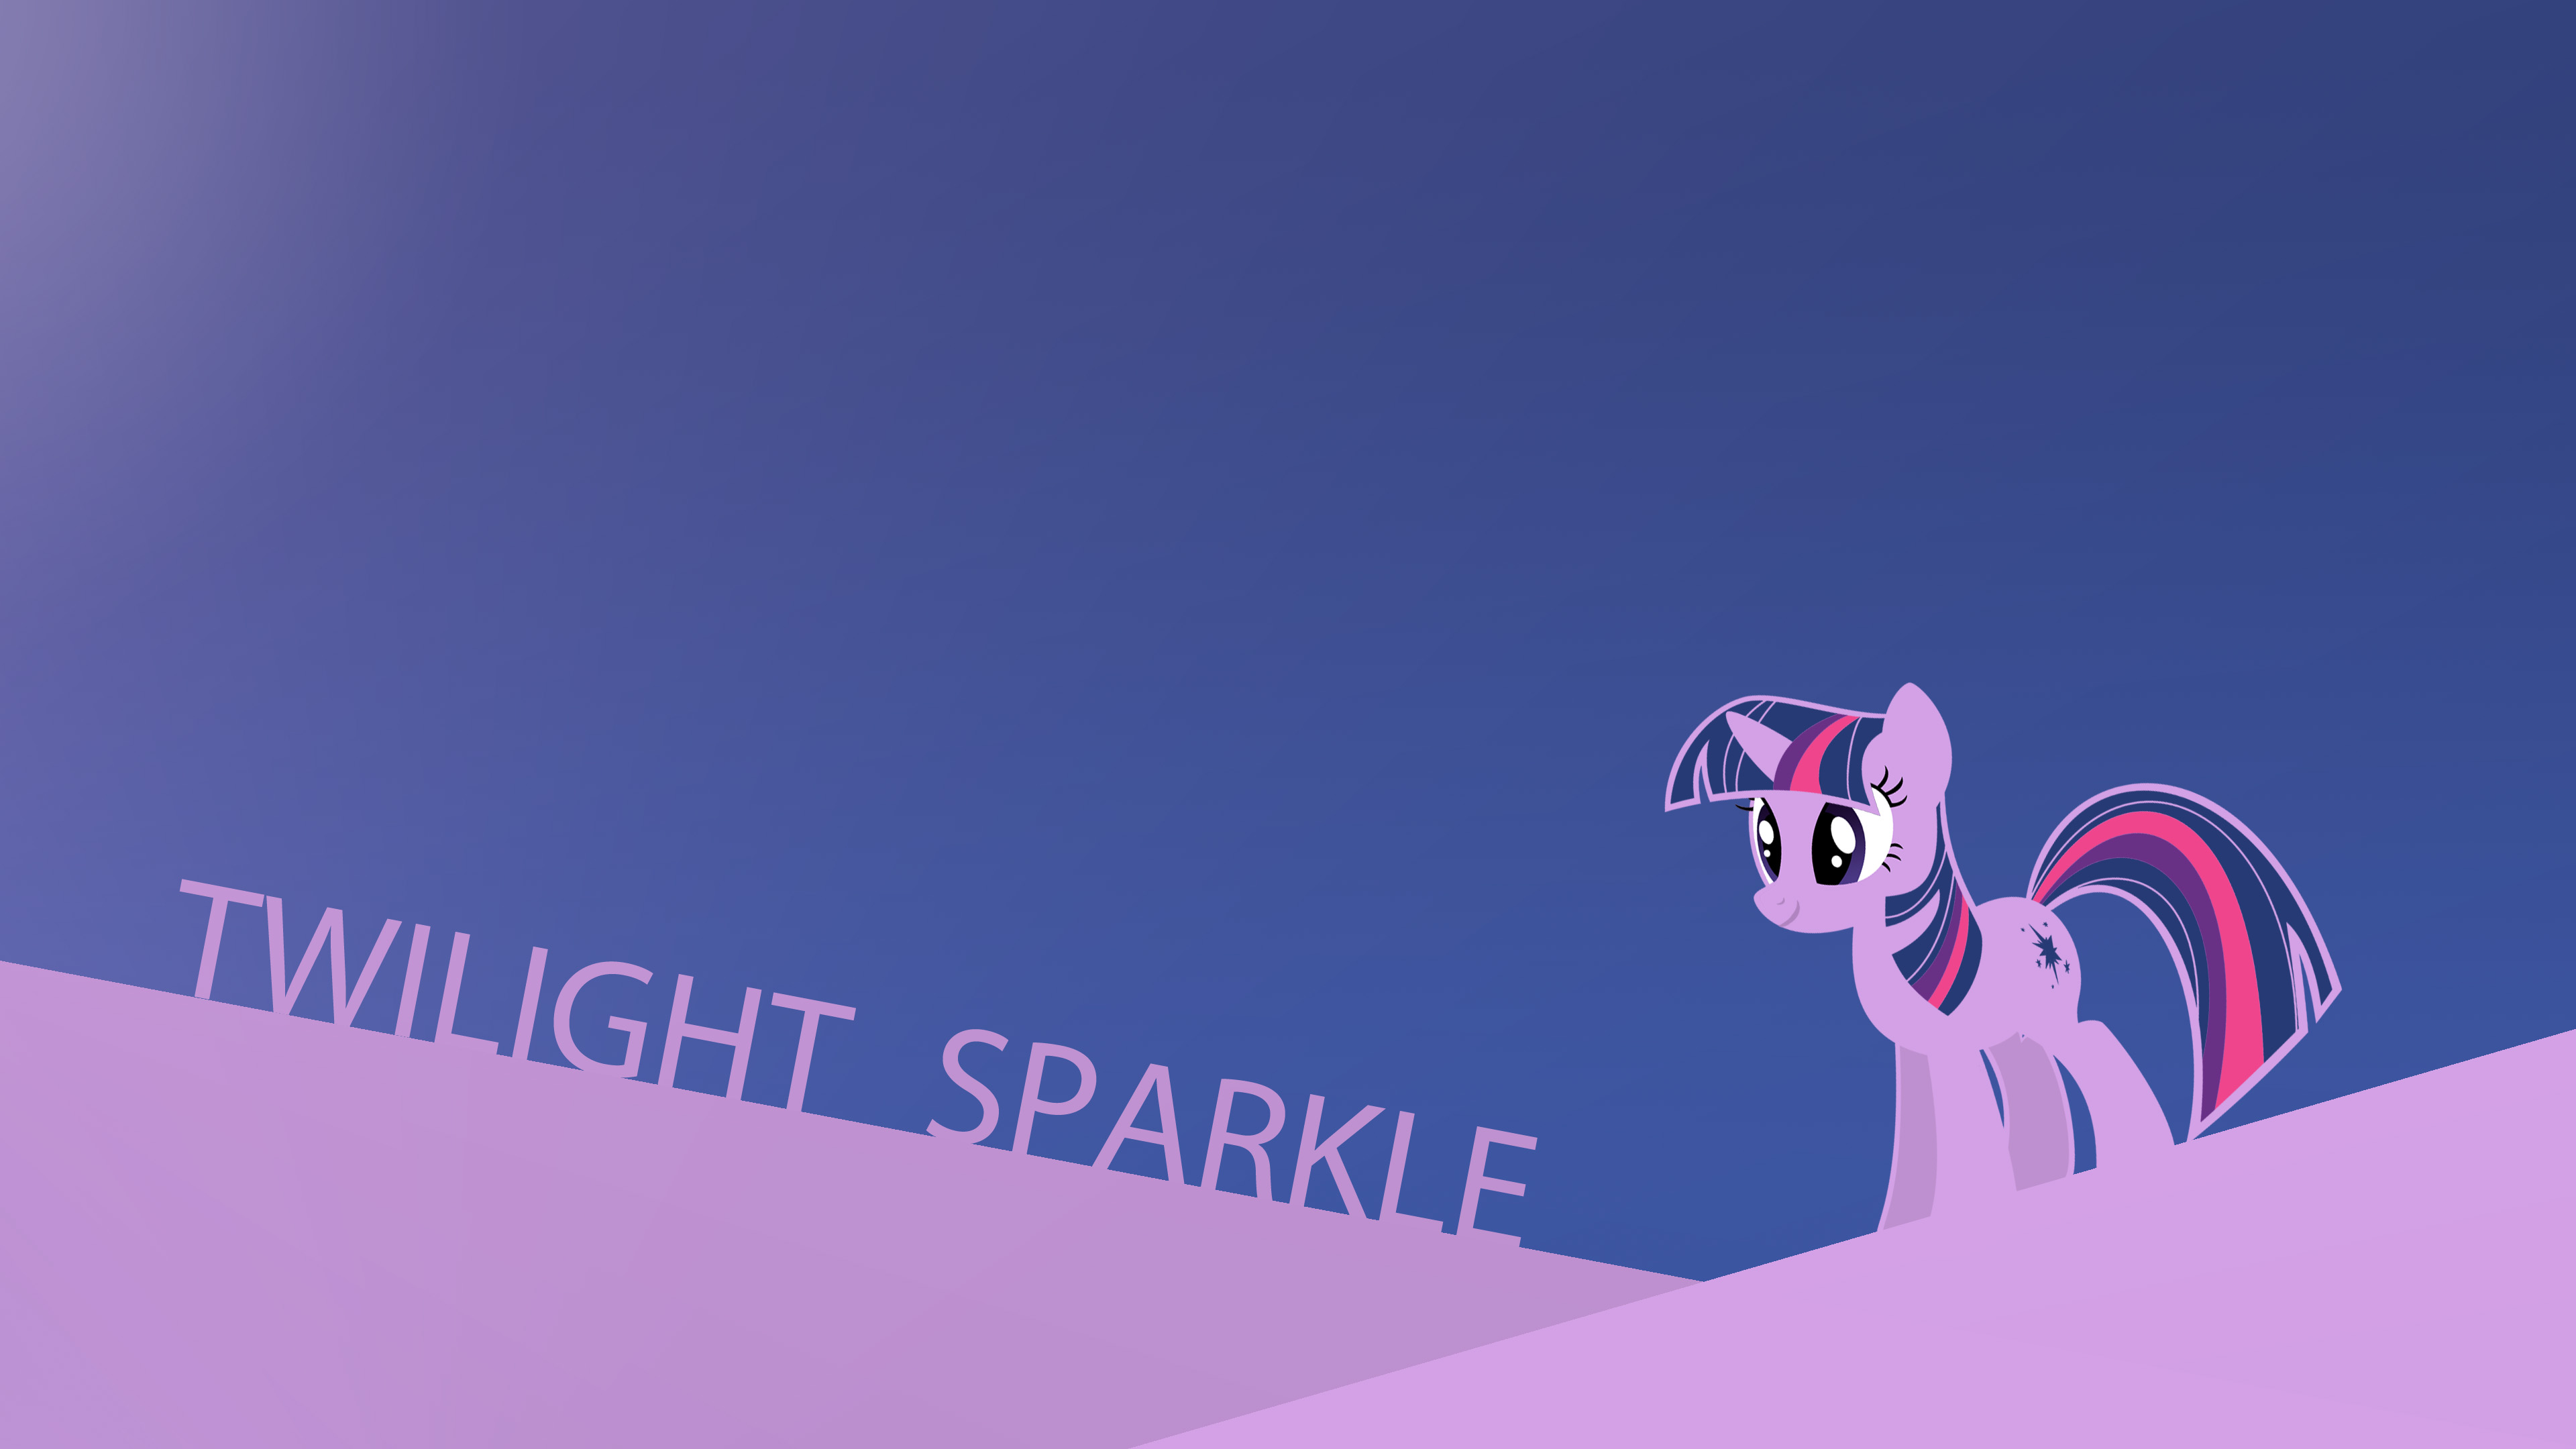 Twilight Sparkle - minimalistic wallpaper by DaVca